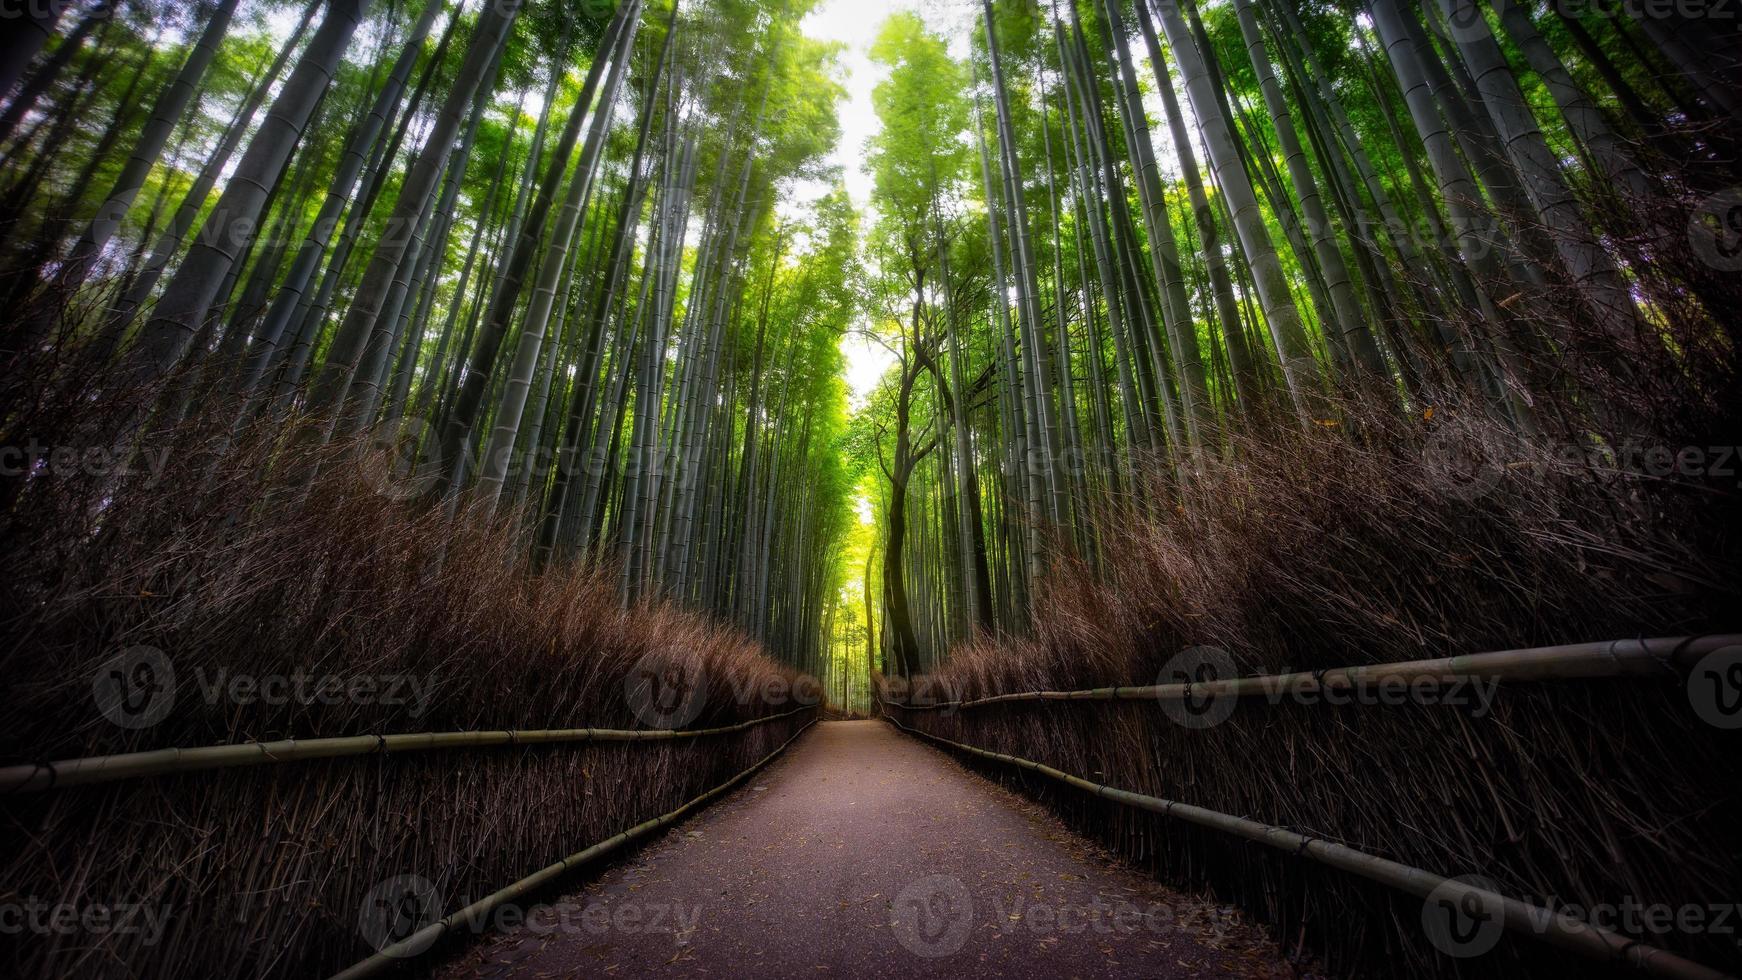 foret de bambou photo